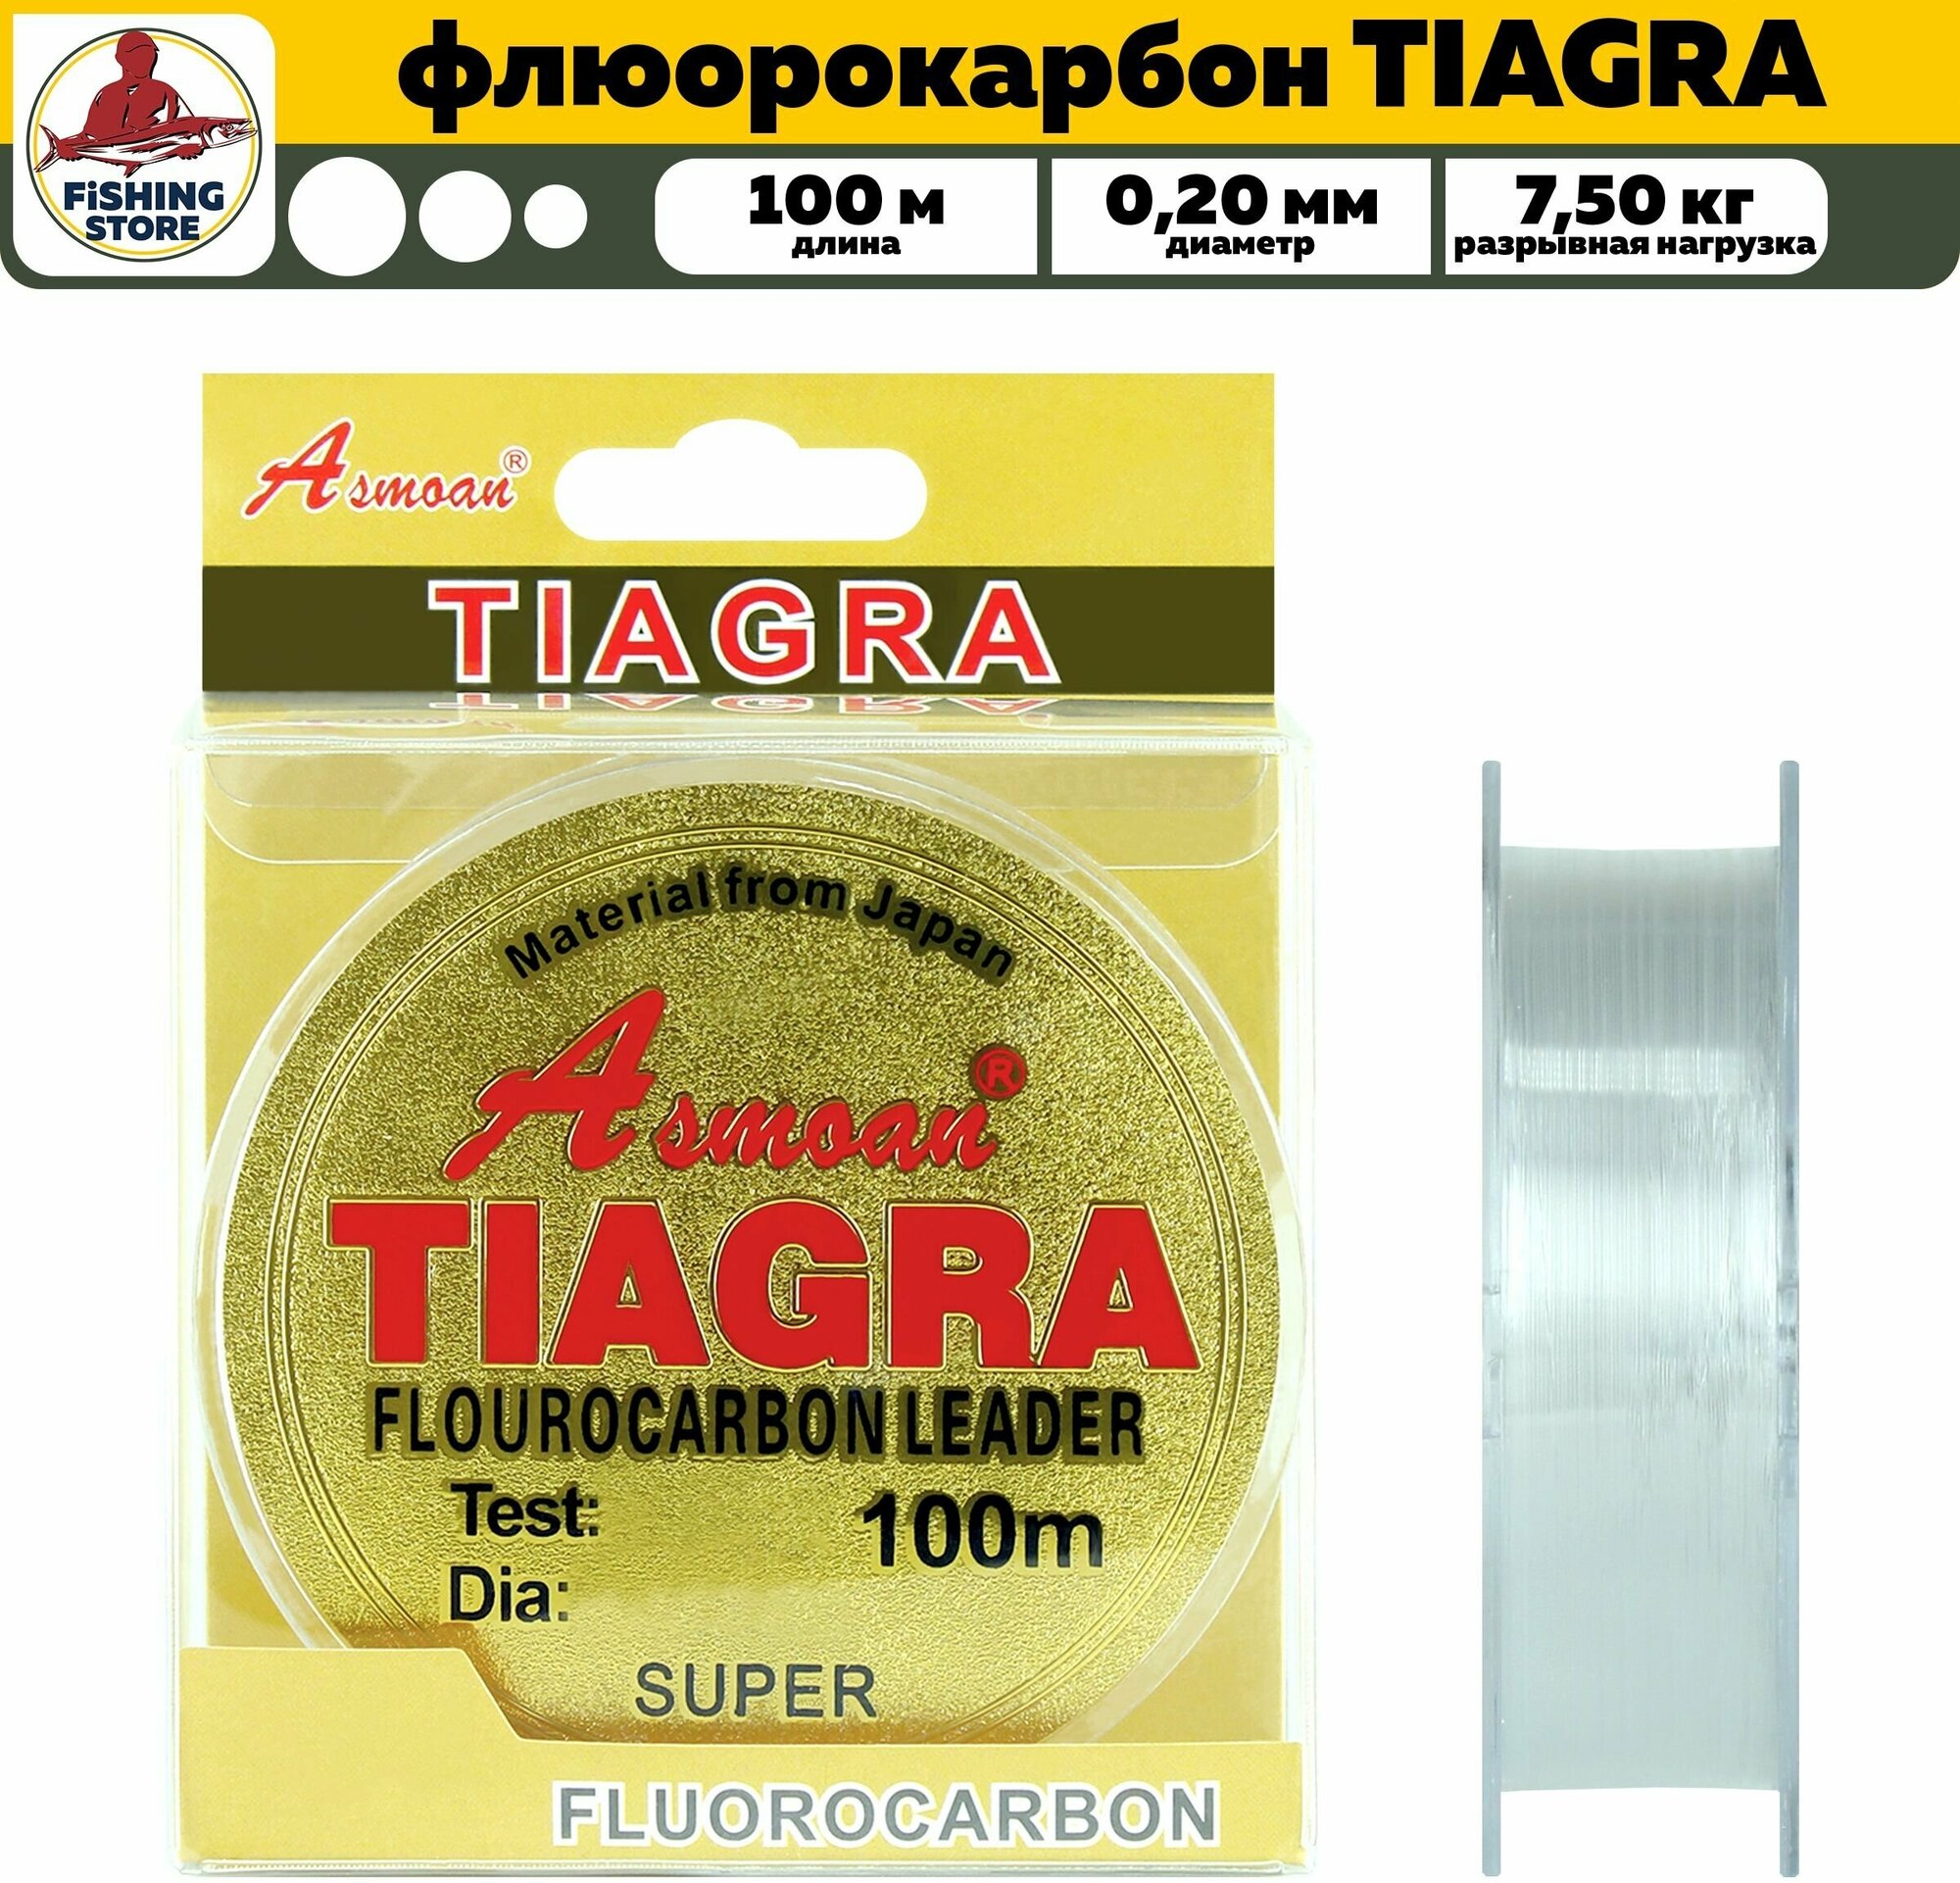 Леска Флюорокарбон TIAGRA 100м 020 (прозрачный) 750 кг. / флюр / на спиннинг / на рыбалку / на карпа / на фидер